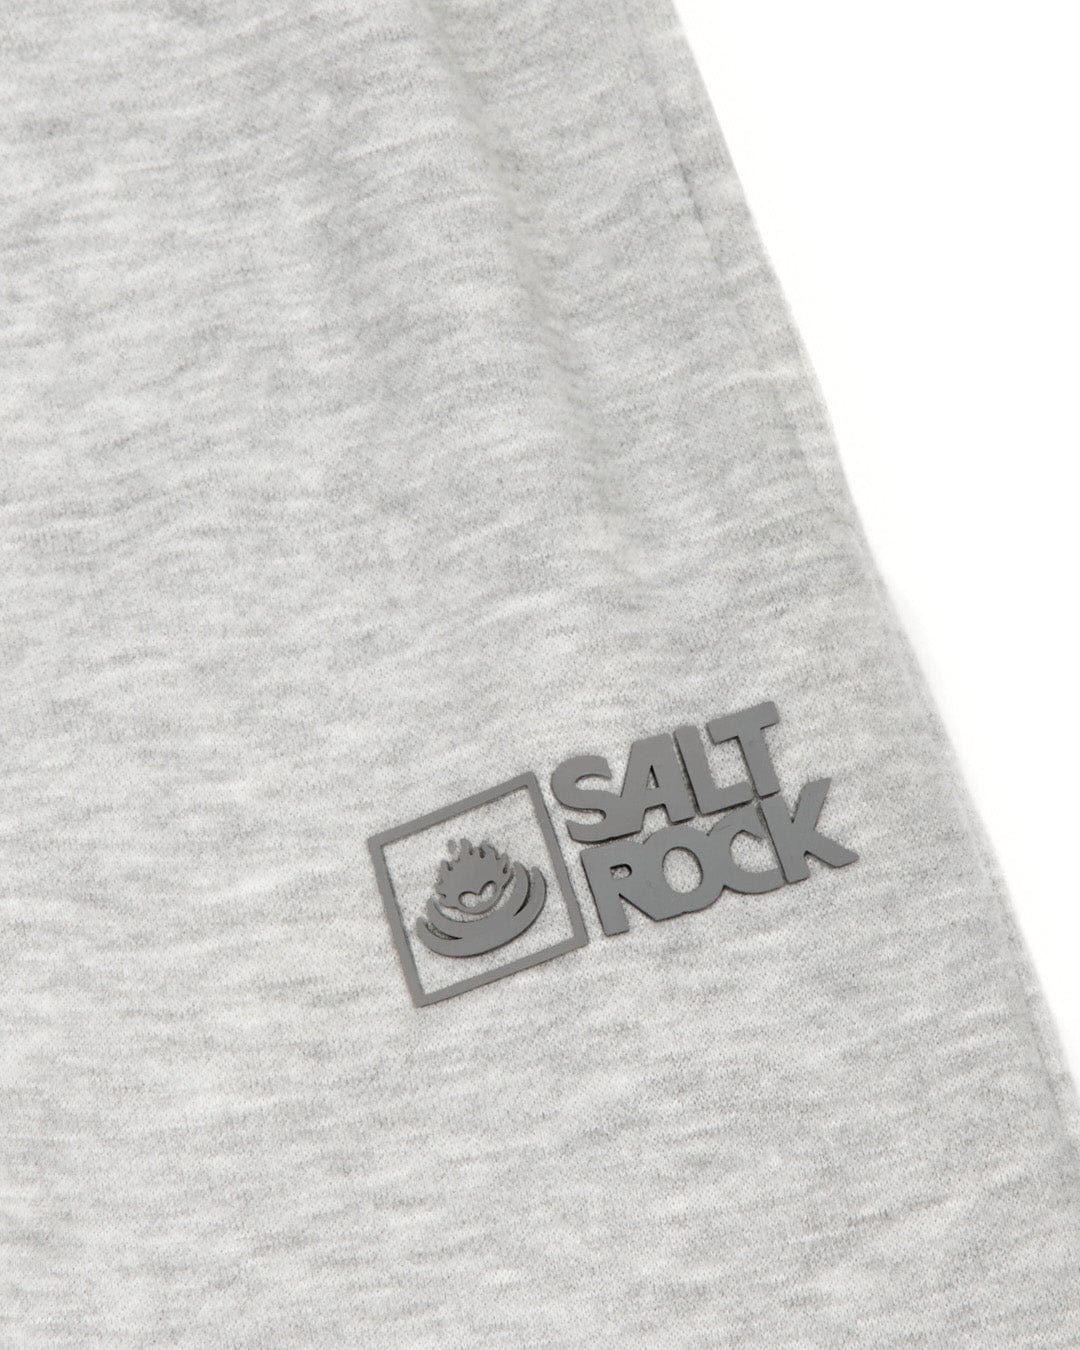 The Saltrock - Mens Original 20 Jogger - Grey branding on a comfortable fit grey sweatshirt.